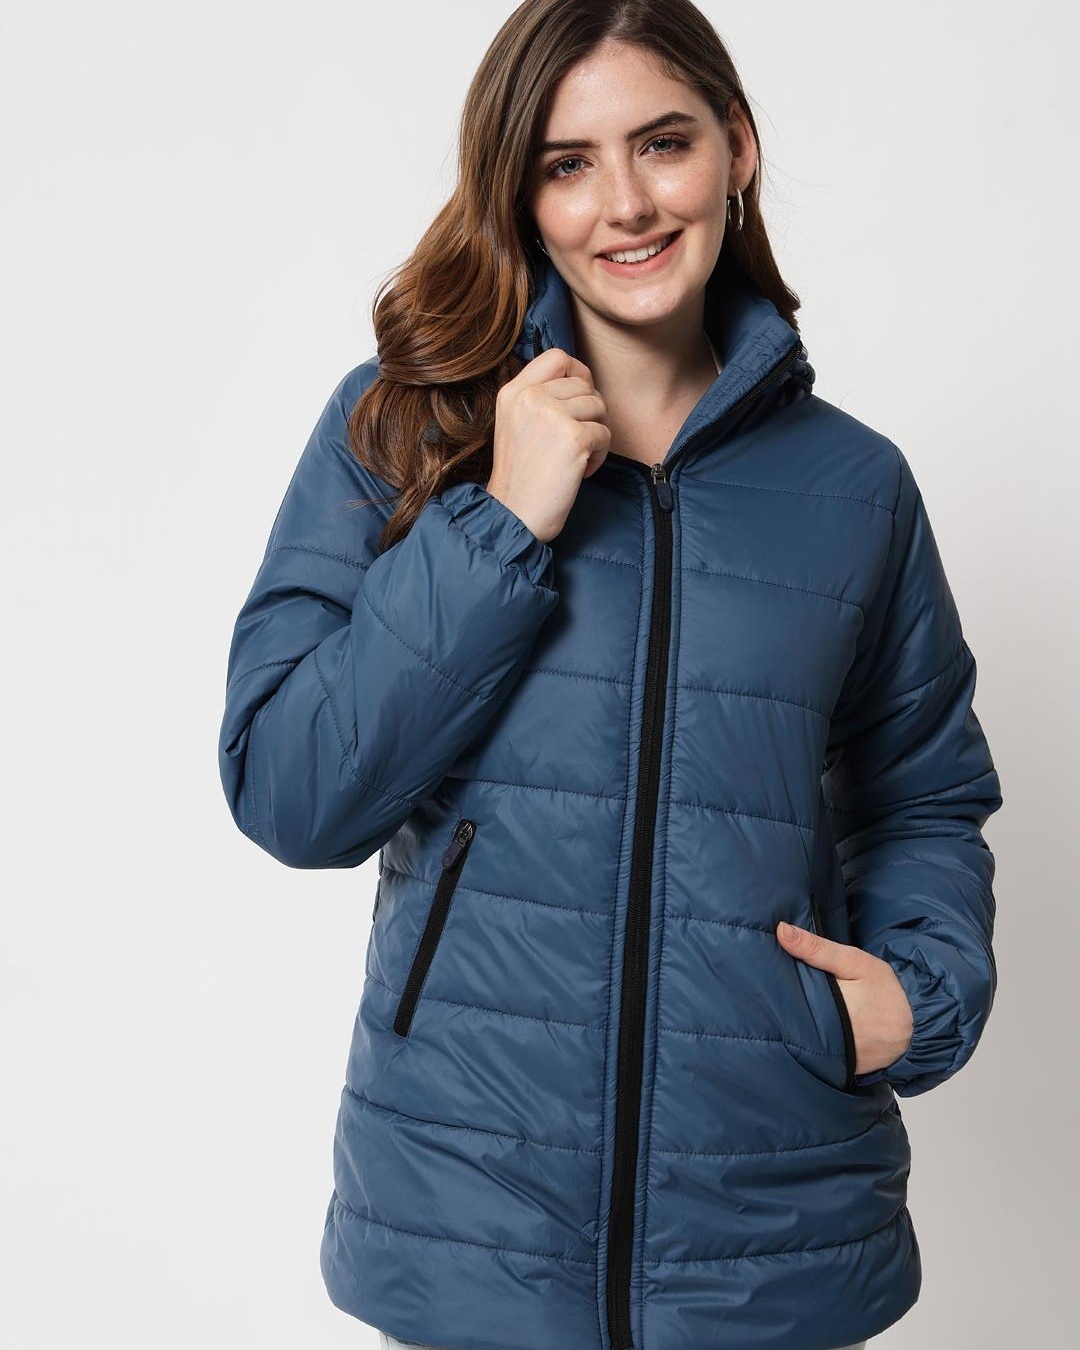 Buy Women's Blue Hooded Puffer Jacket for Women Blue Online at Bewakoof